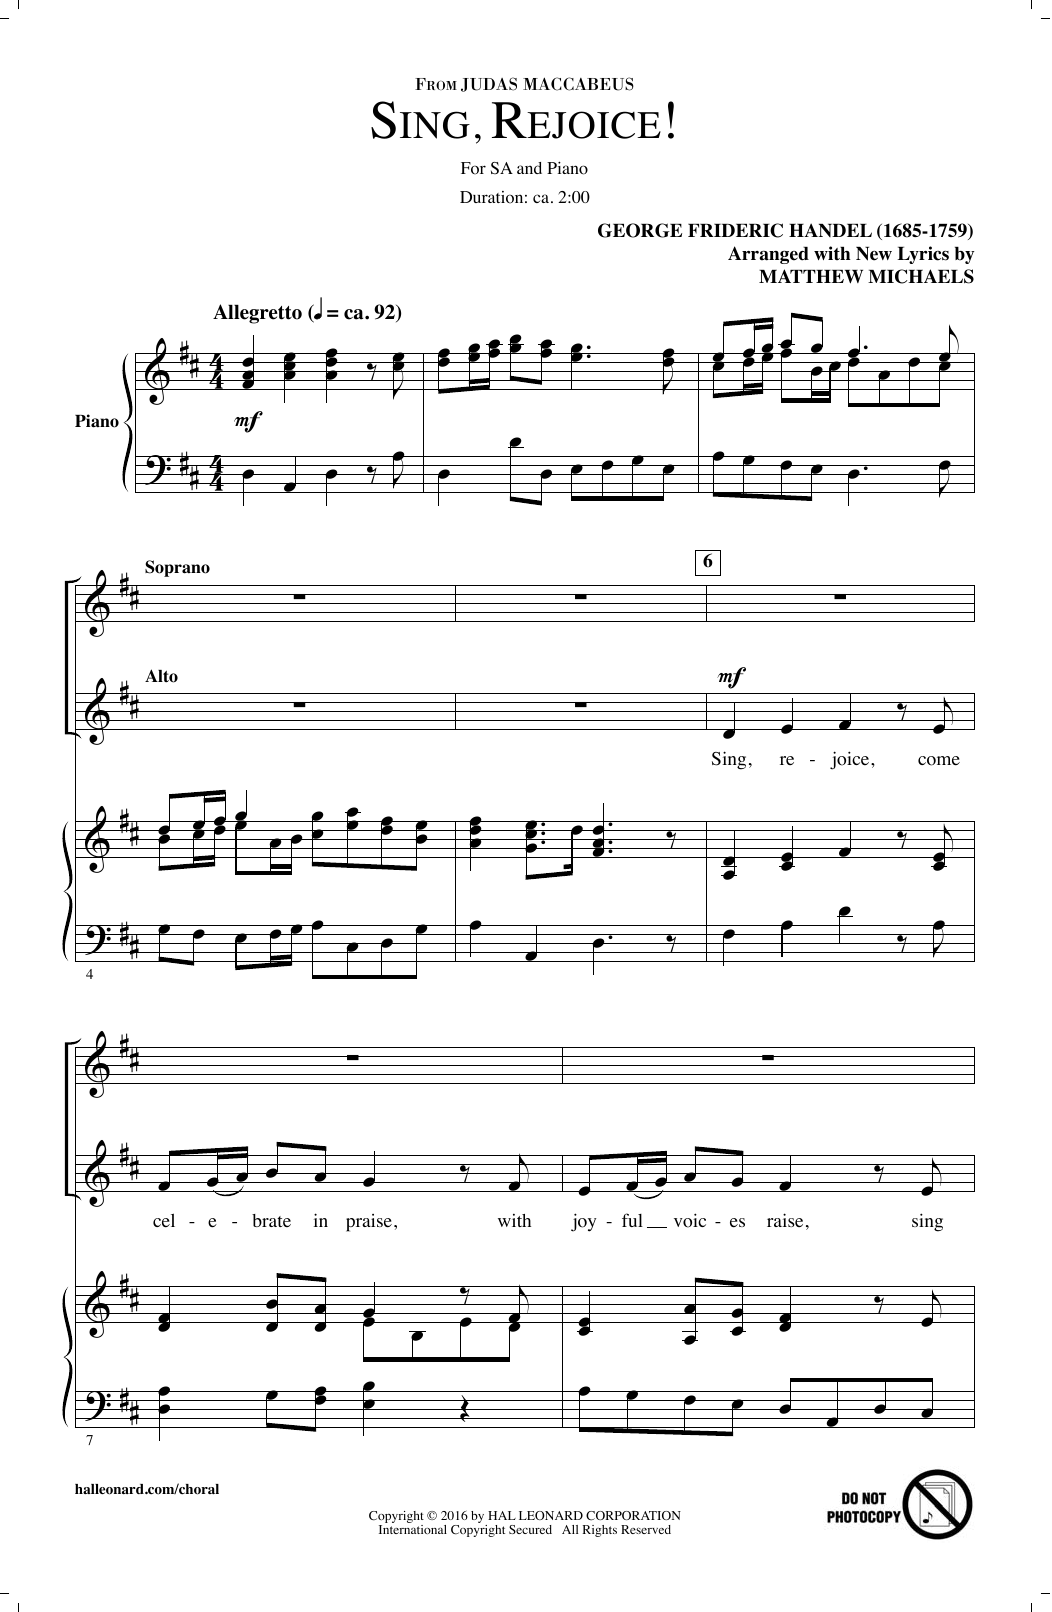 Matthew Michaels Sing, Rejoice! (from Judas Maccabaeus) Sheet Music Notes & Chords for 2-Part Choir - Download or Print PDF